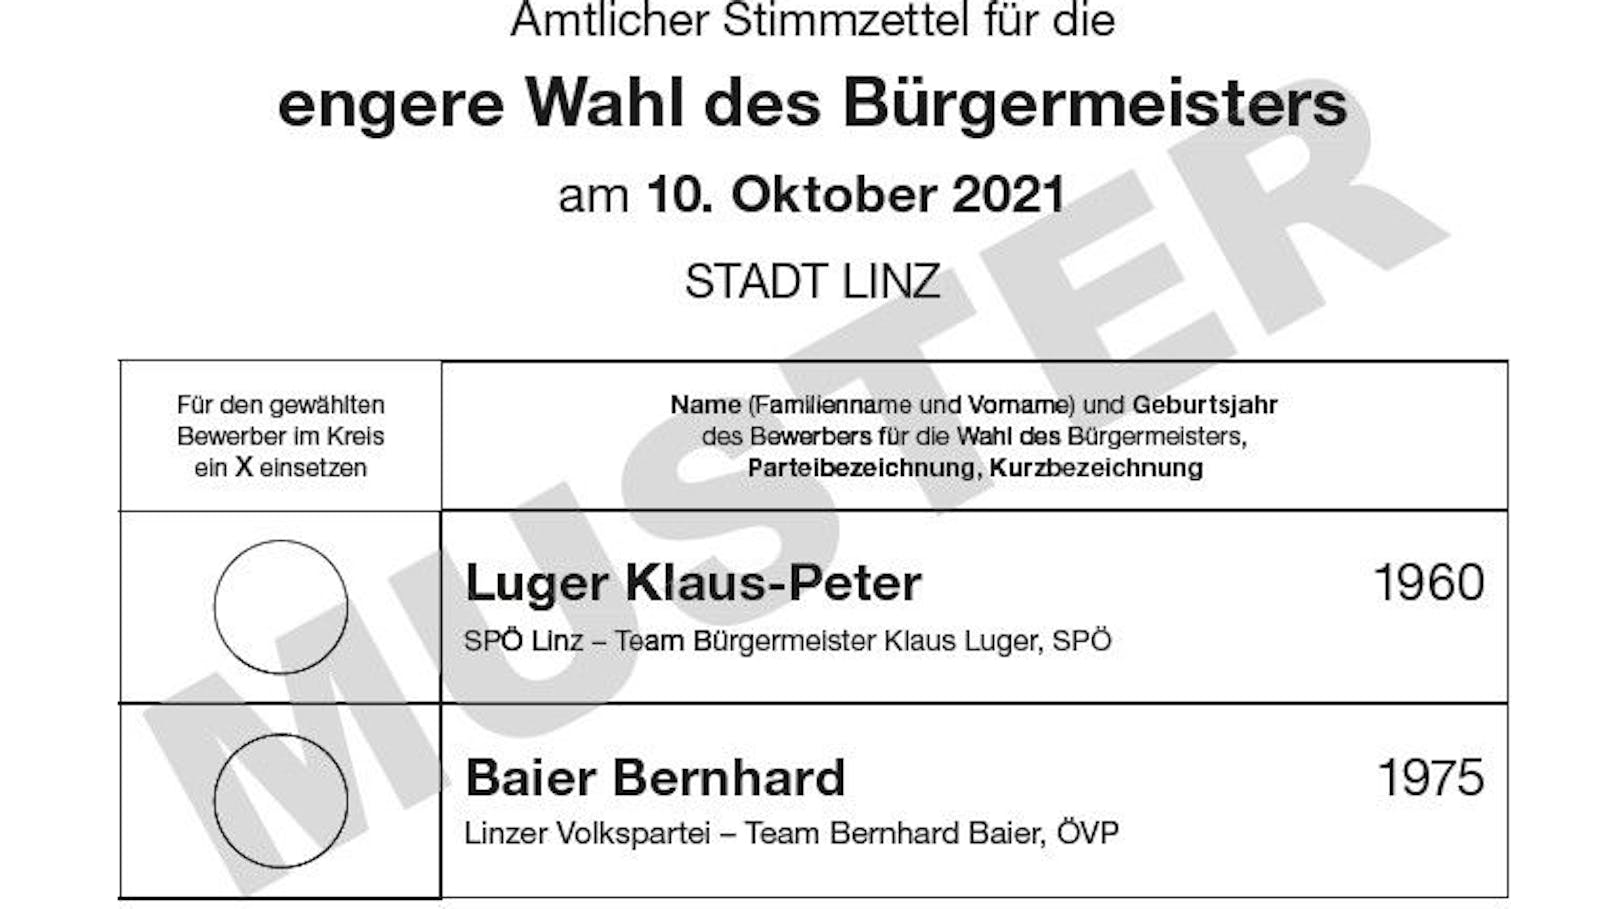 In Linz lautet das Duell Klaus Luger gegen Bernhard Baier.